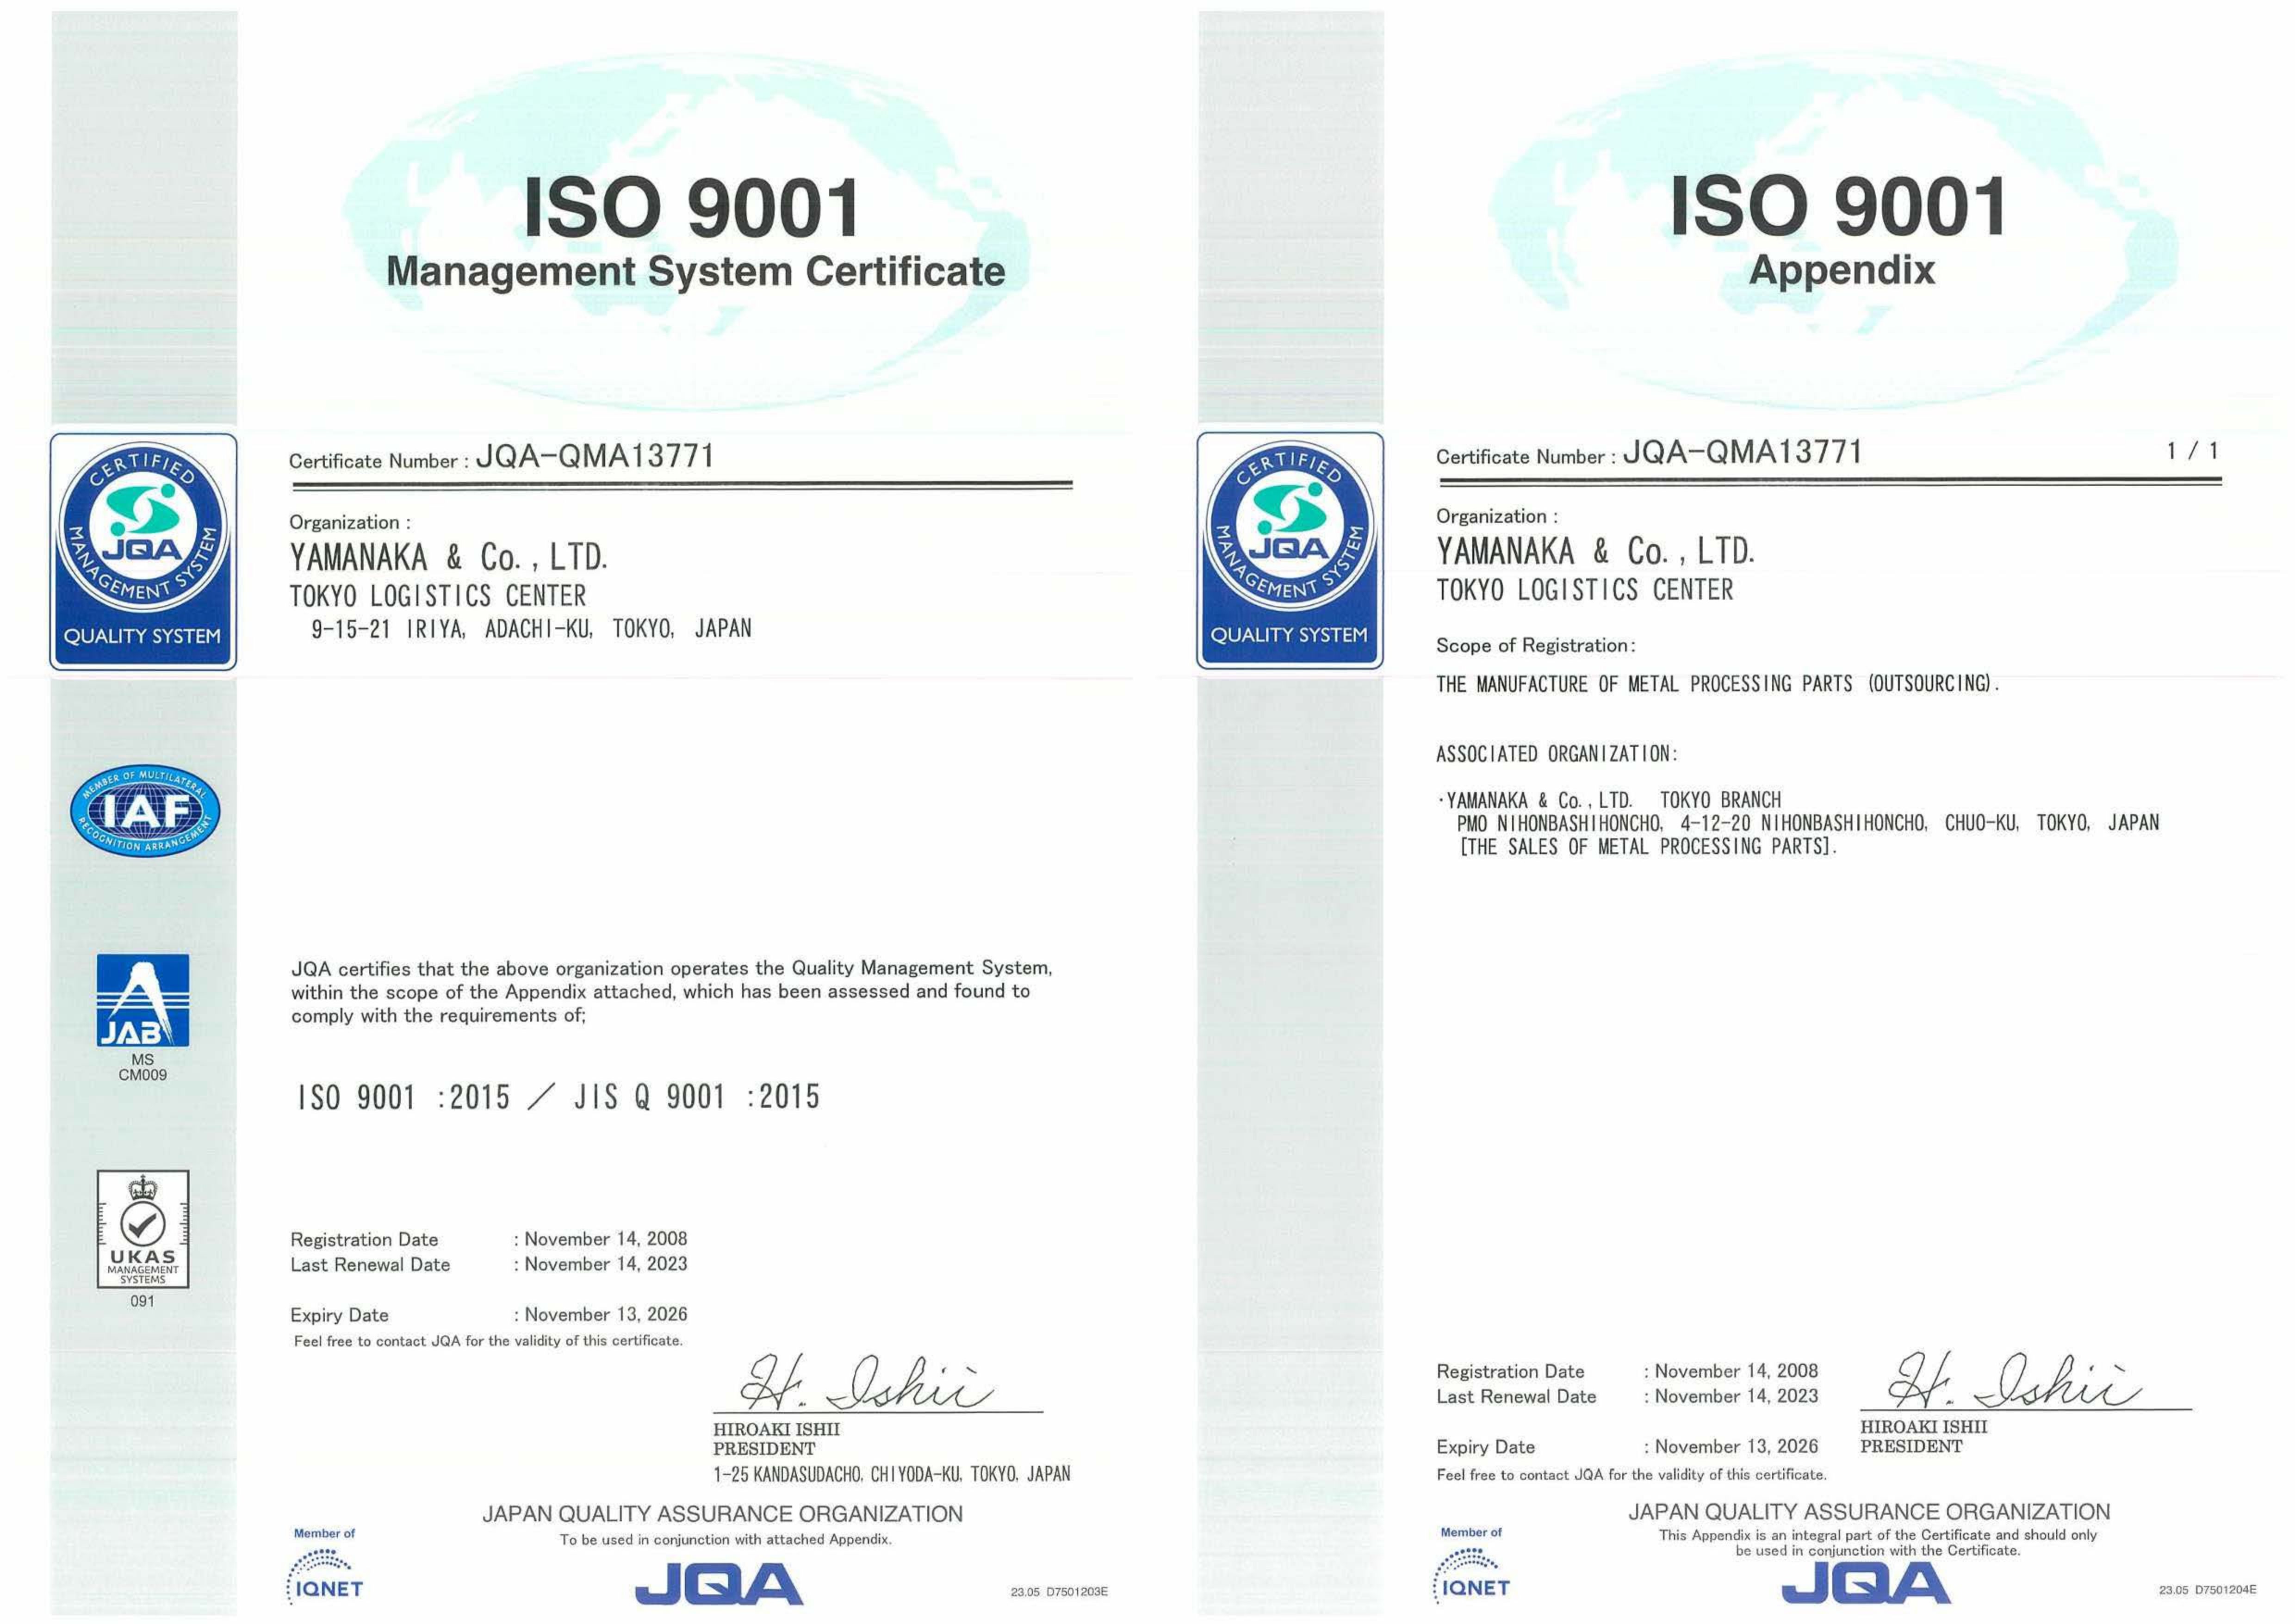 ISO 9001 Management System Registration Certificate